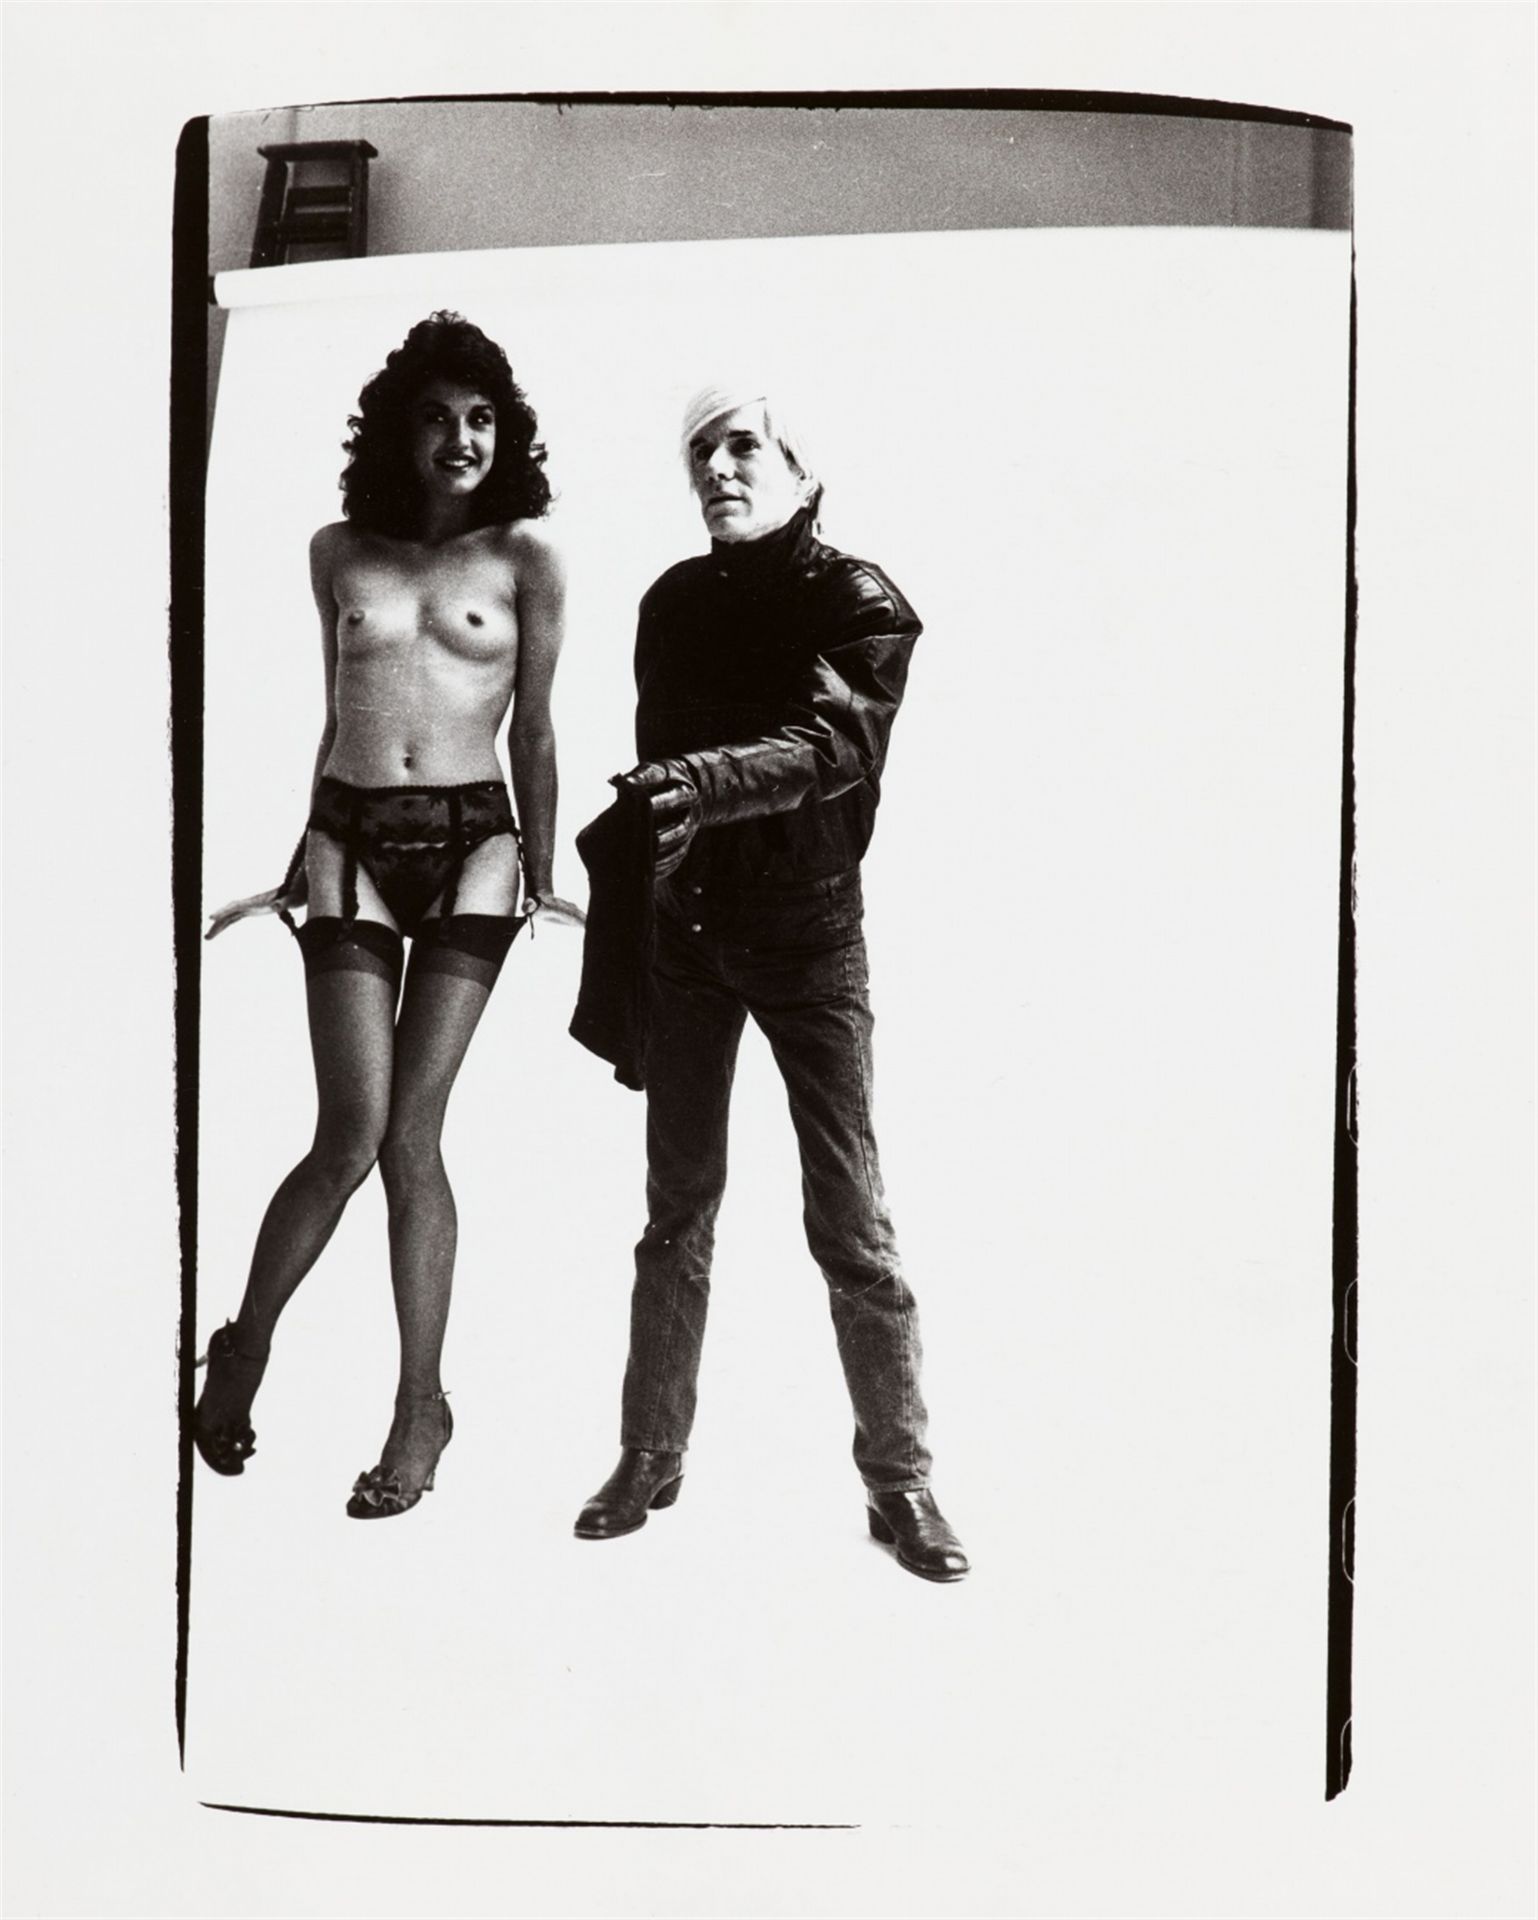 Andy Warhol, Self portrait with Janice Dickinson